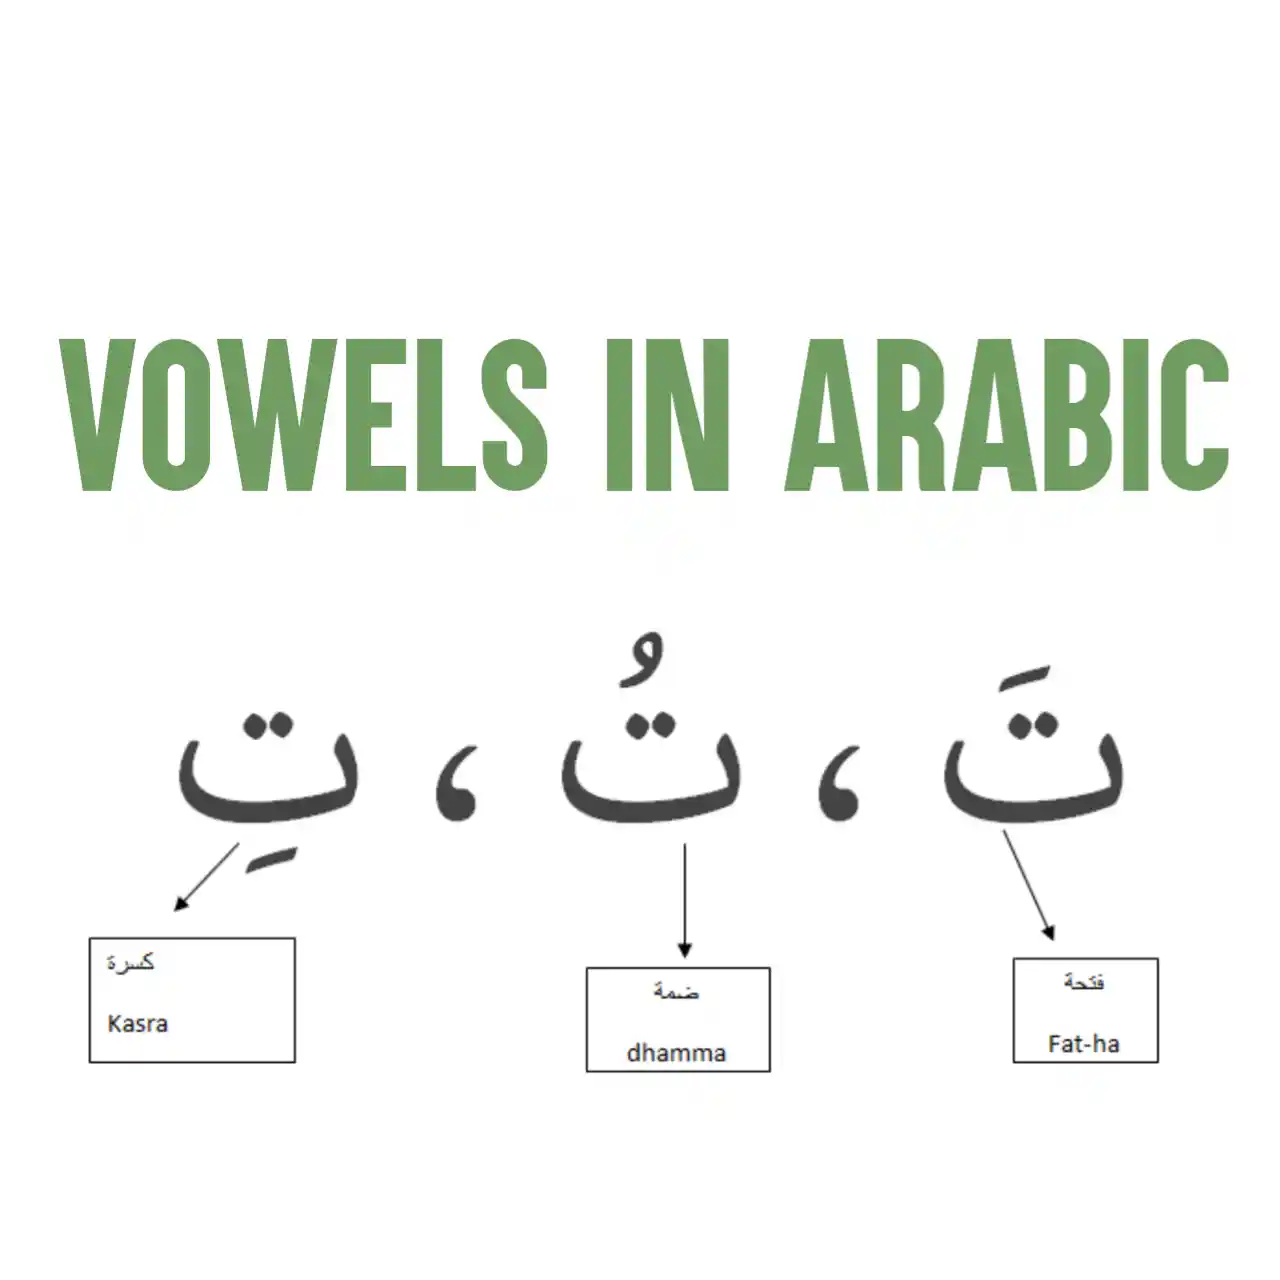 Vowels In Arabic